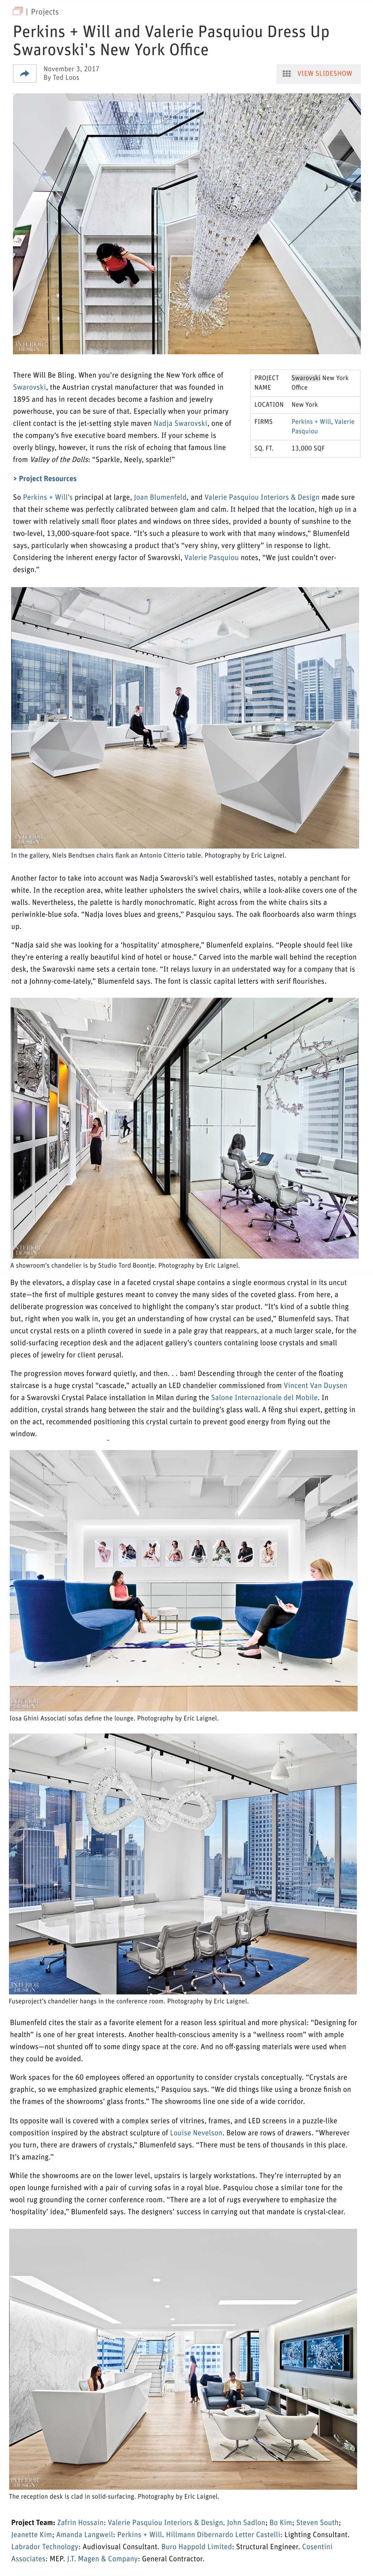 interior design sept 2017 swaroski article